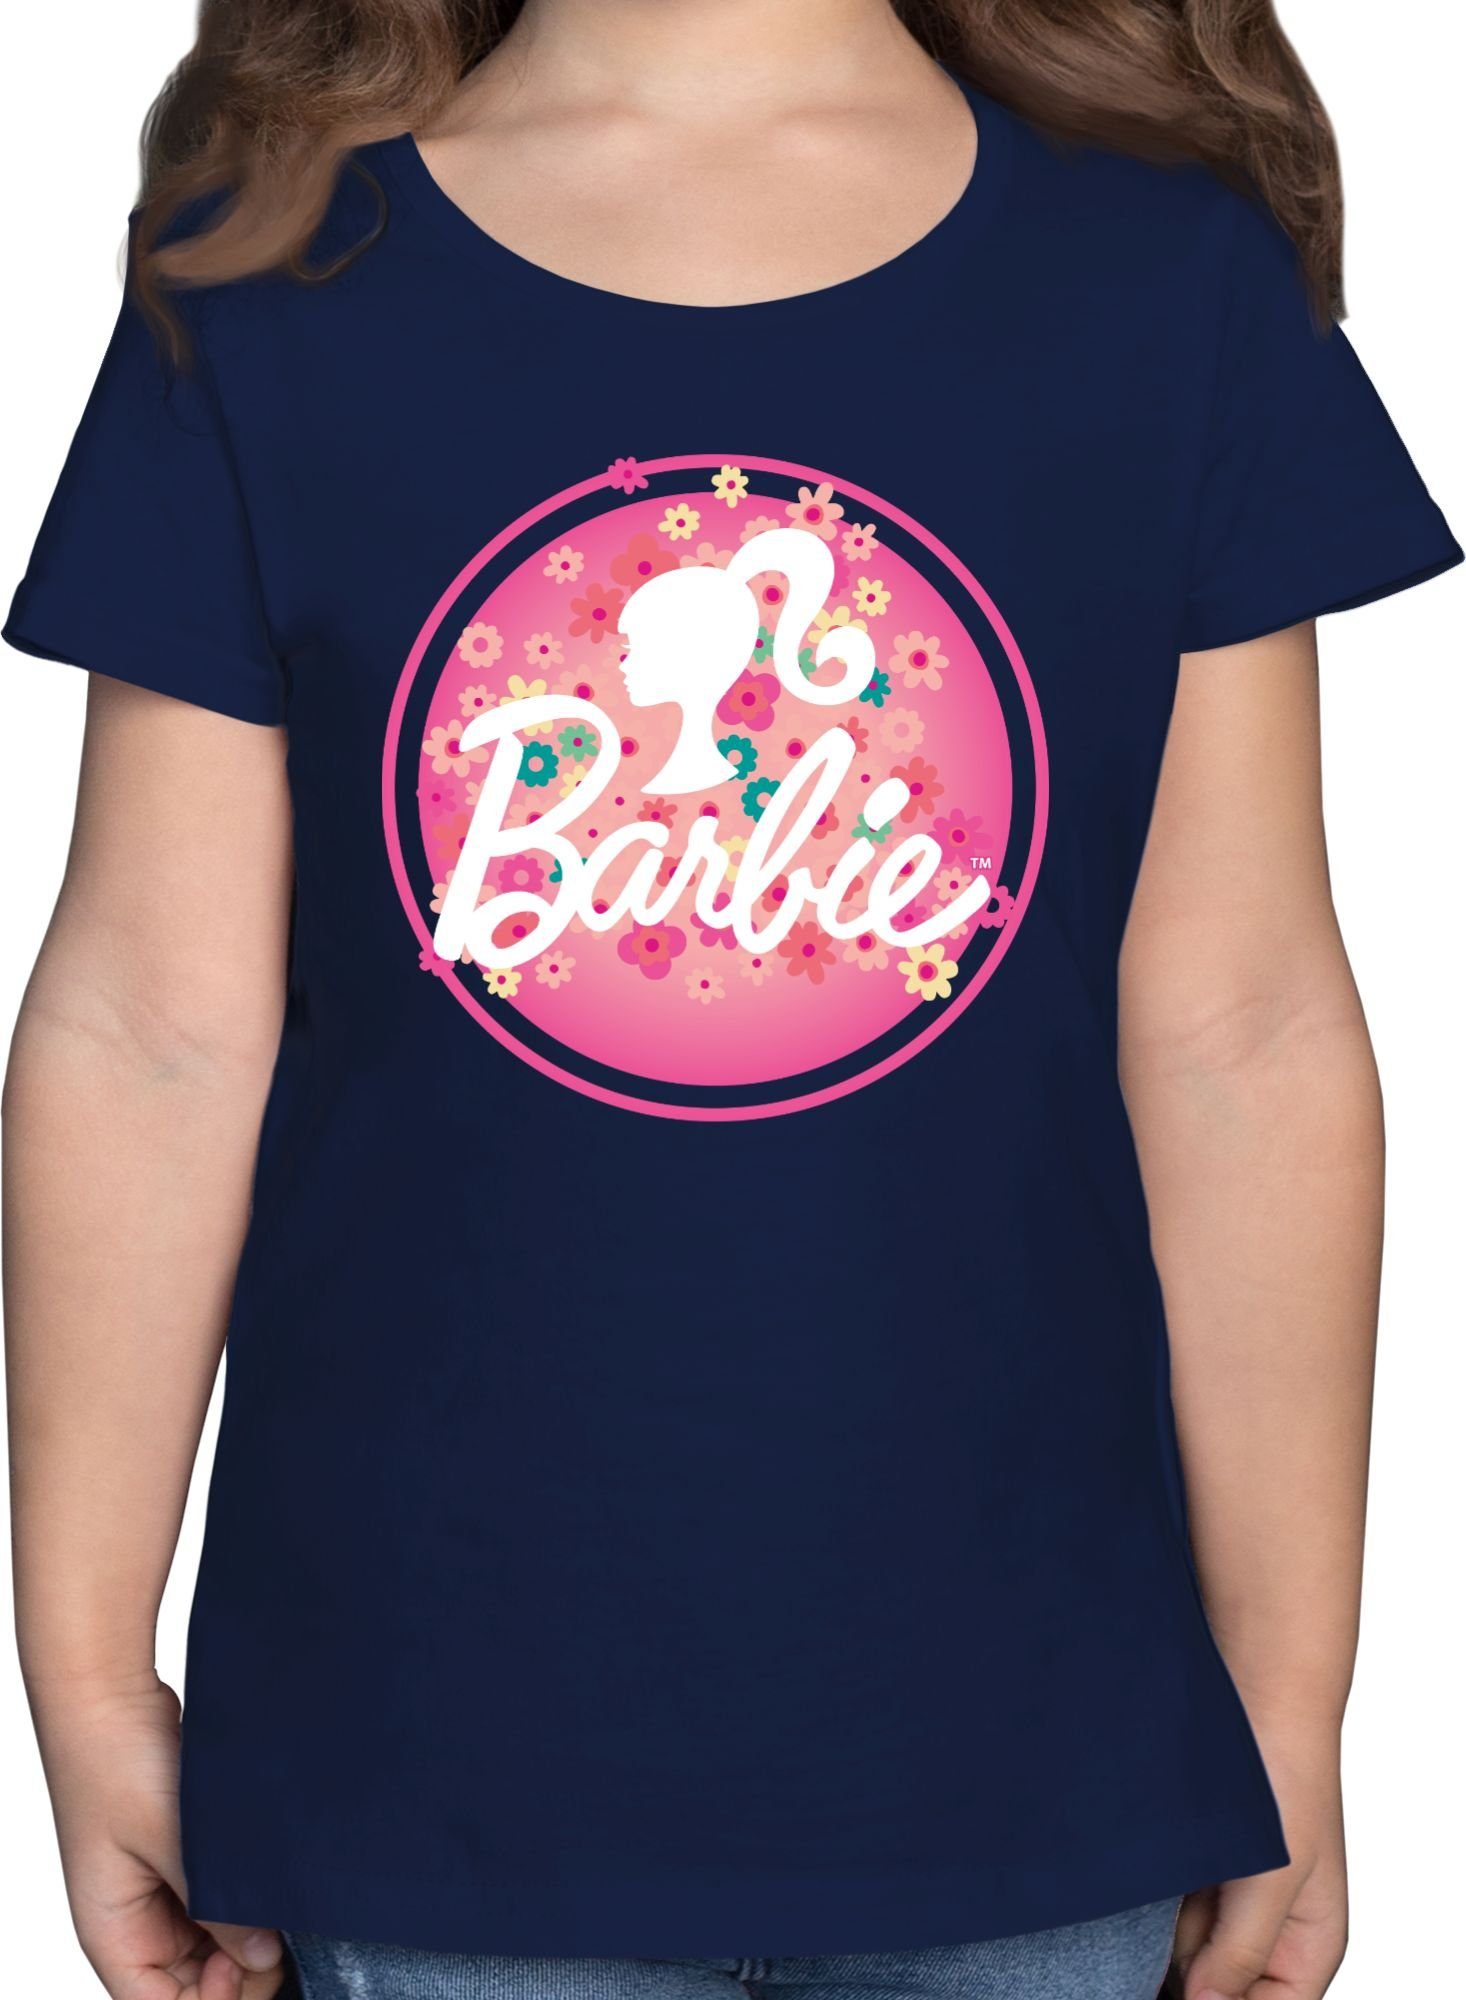 Logo Barbie 3 T-Shirt Blumen Shirtracer Dunkelblau Barbie Mädchen